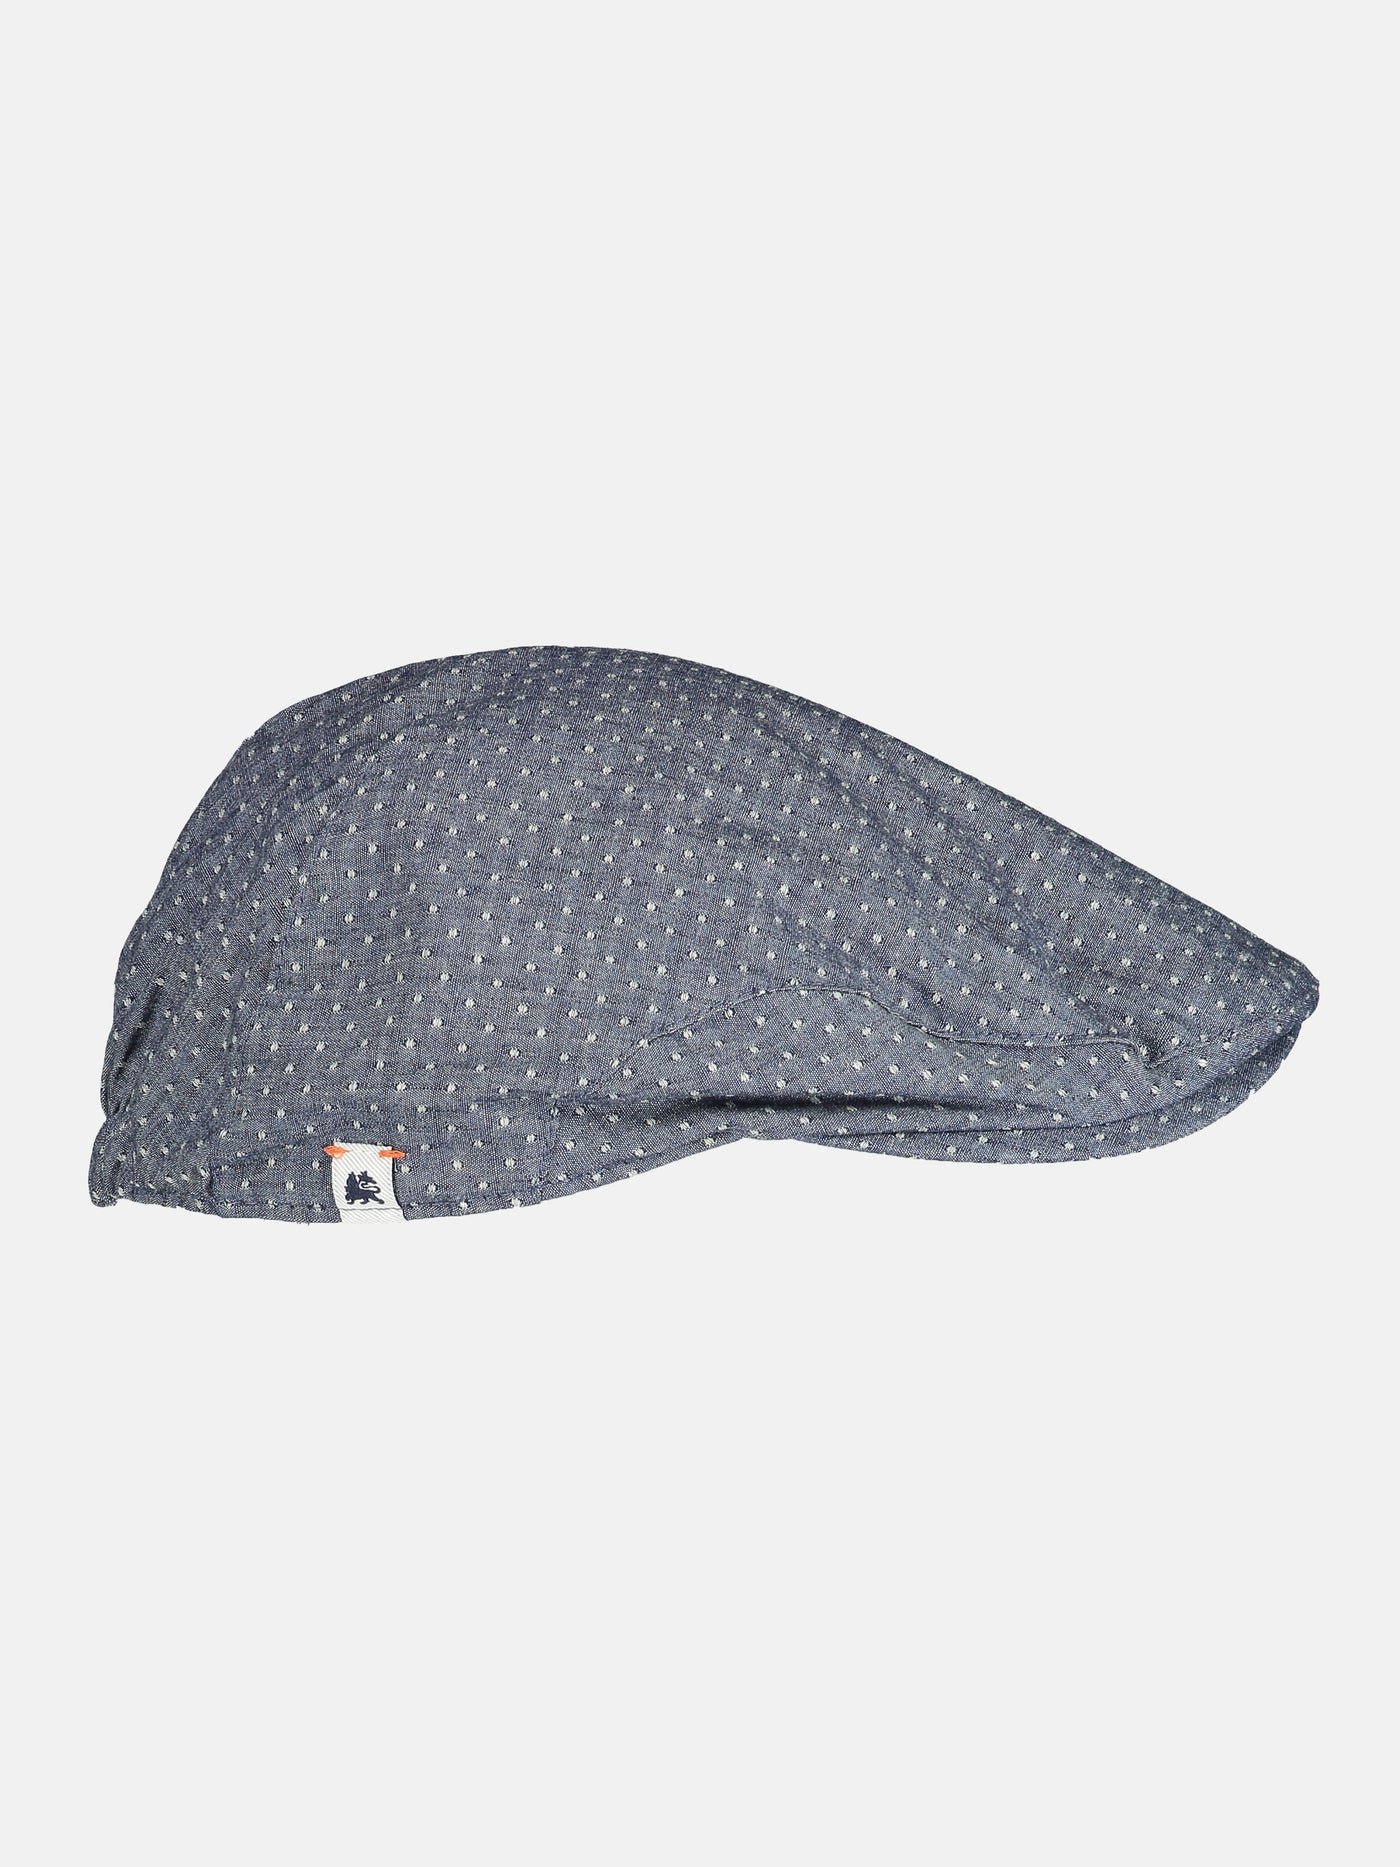 GATSBY jacquard style flat cap